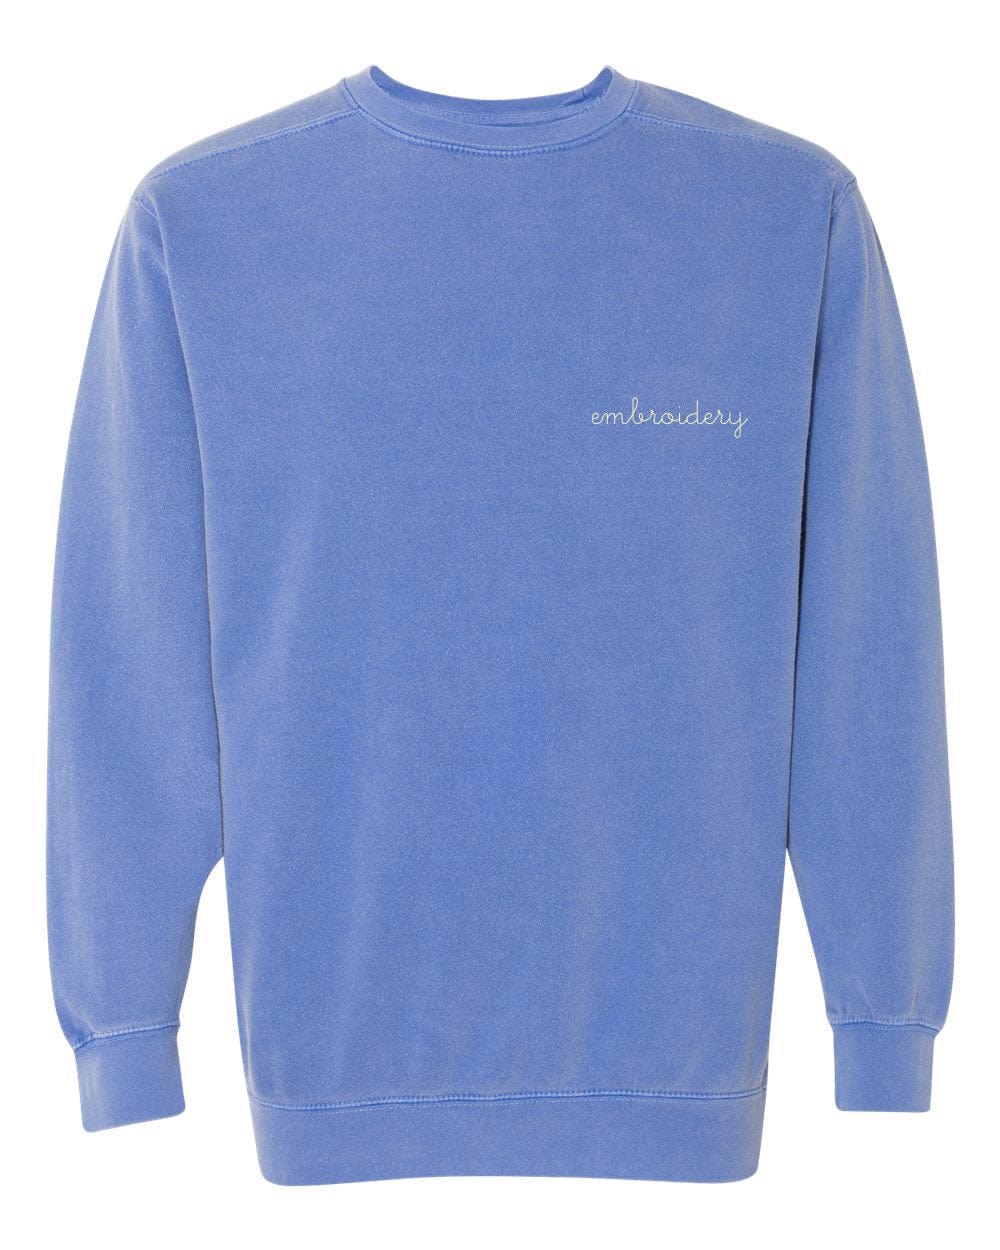 juju + stitch Personalized Custom Embroidered Sweatshirts & Hoodies Adult Vintagewash Crewneck Sweatshirt (Unisex)